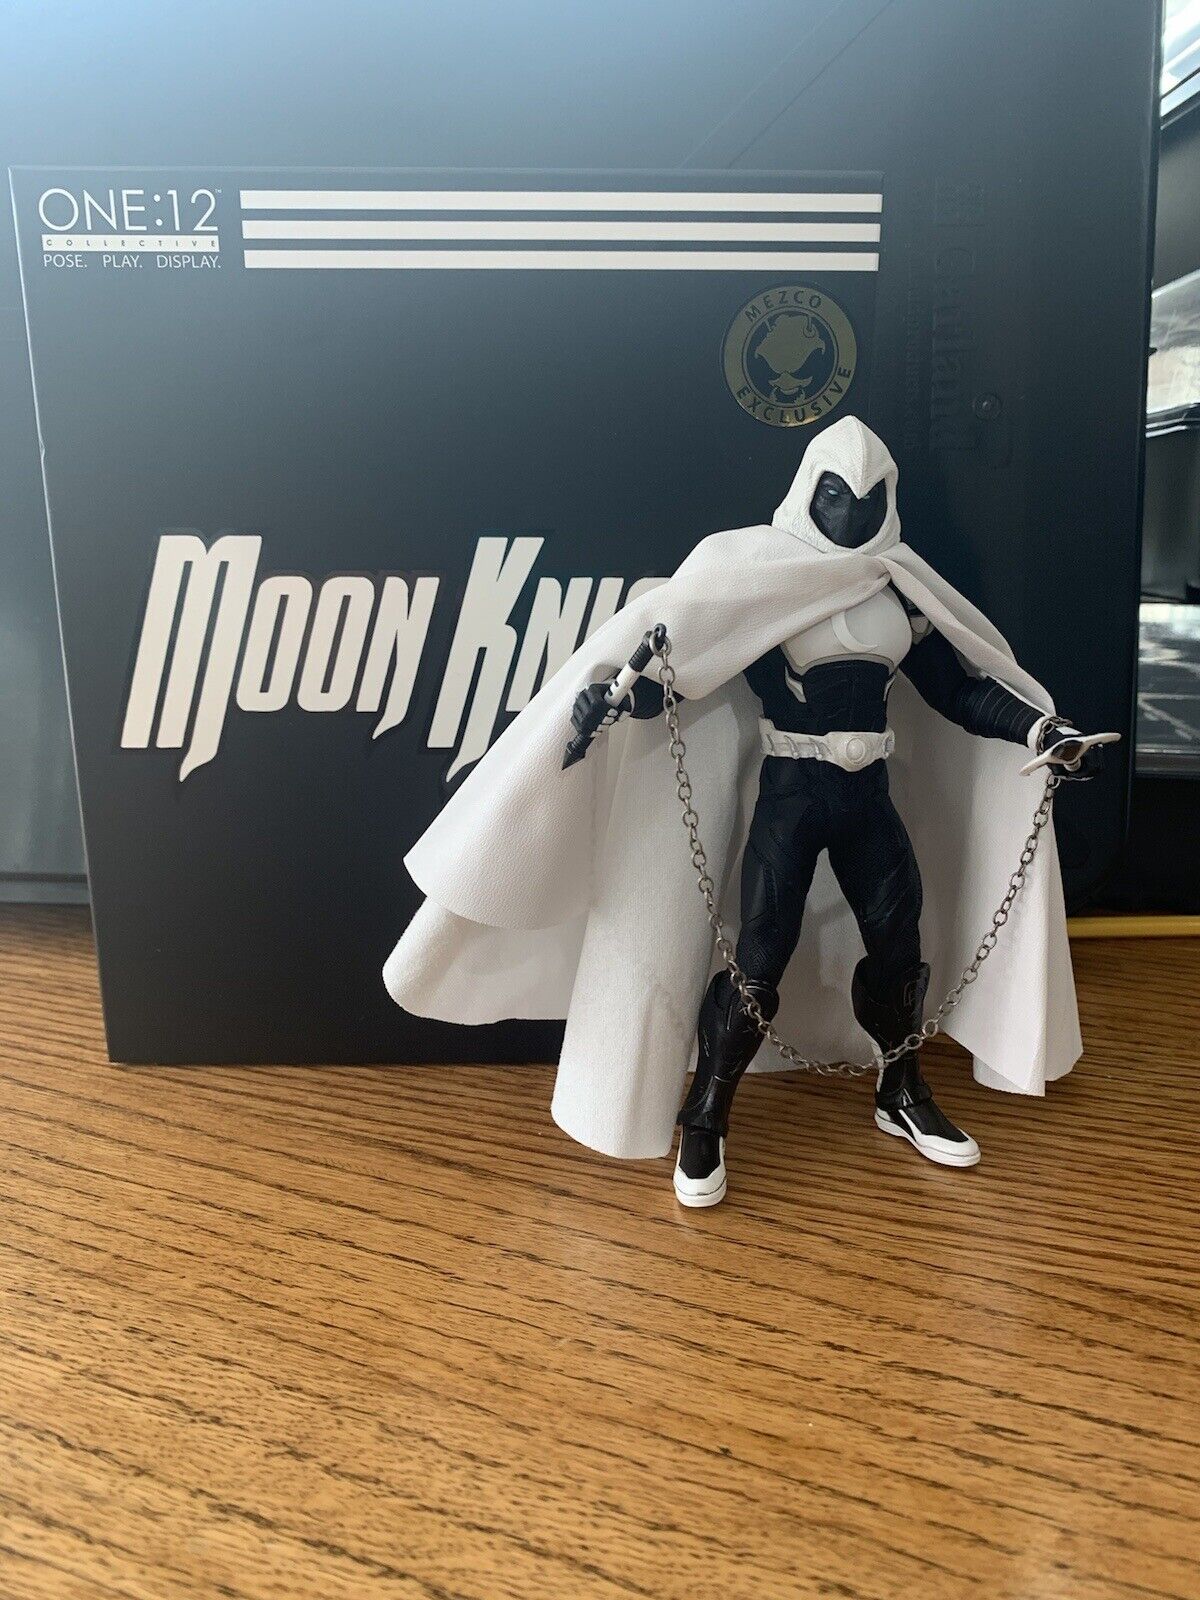 Displayed Mezco One:12 Collective Moon Knight (Mezco Exclusive)